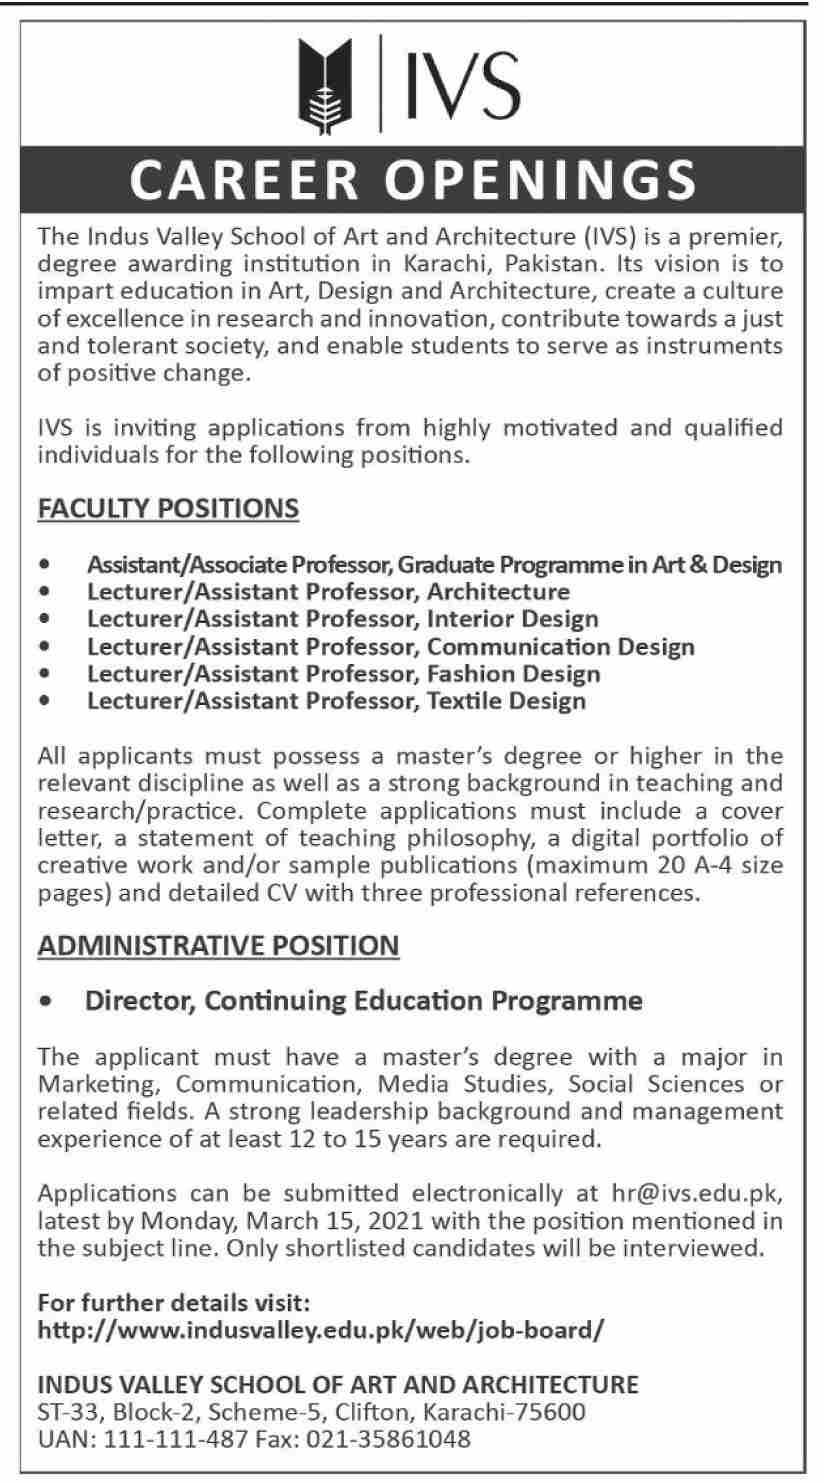 Indus Valley School of Art and Architecture (IVS) Jobs 2021 in Pakistan - Online Apply :- http://www.indusvalley.edu.pk/web/job-board/